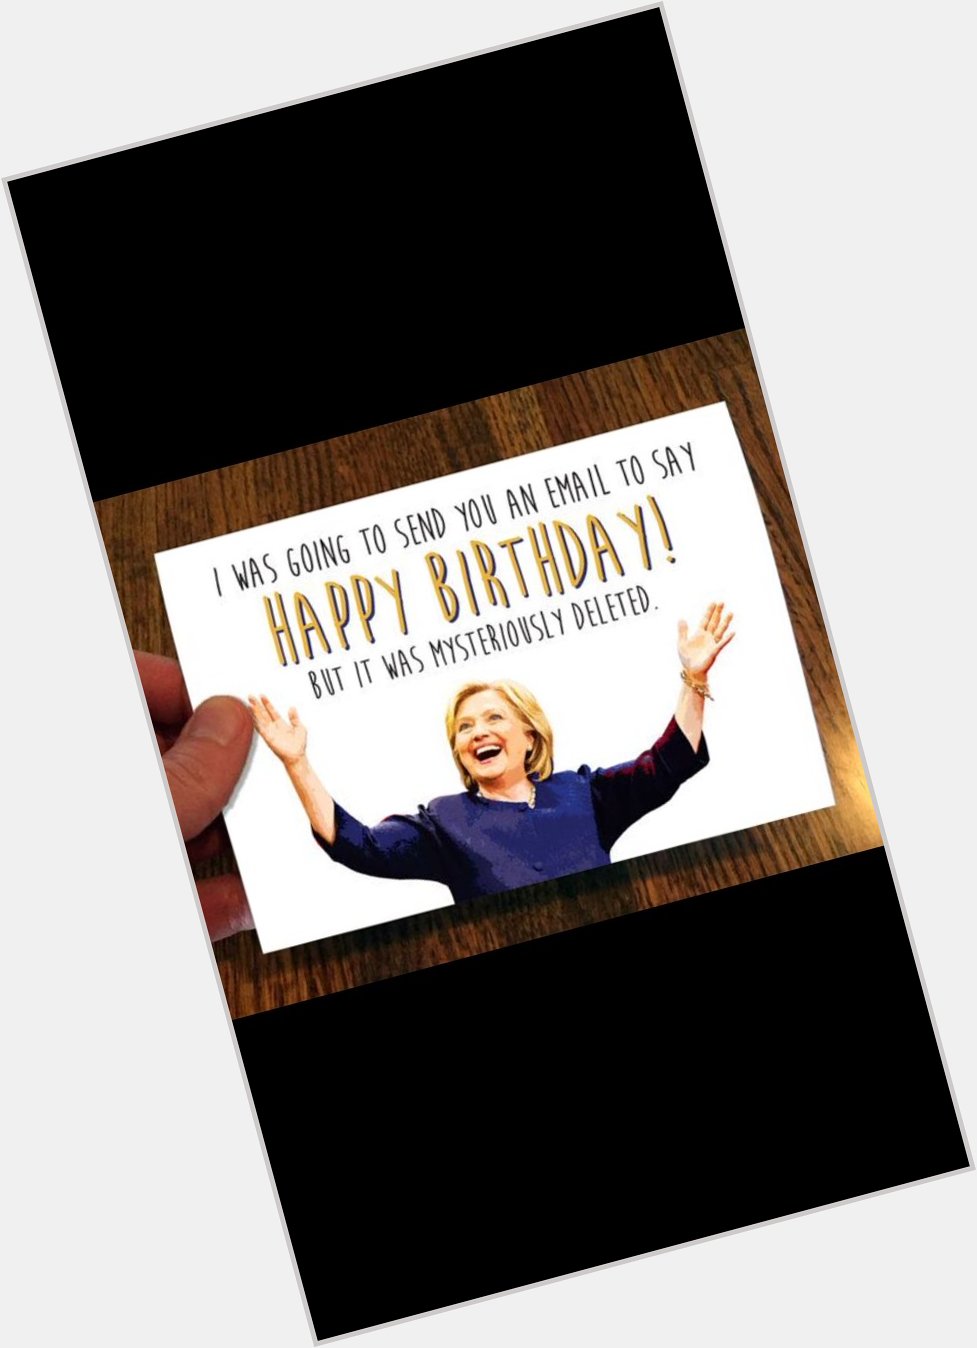 . Let wish Crooked Hillary Clinton A Very Happy Birthday! 